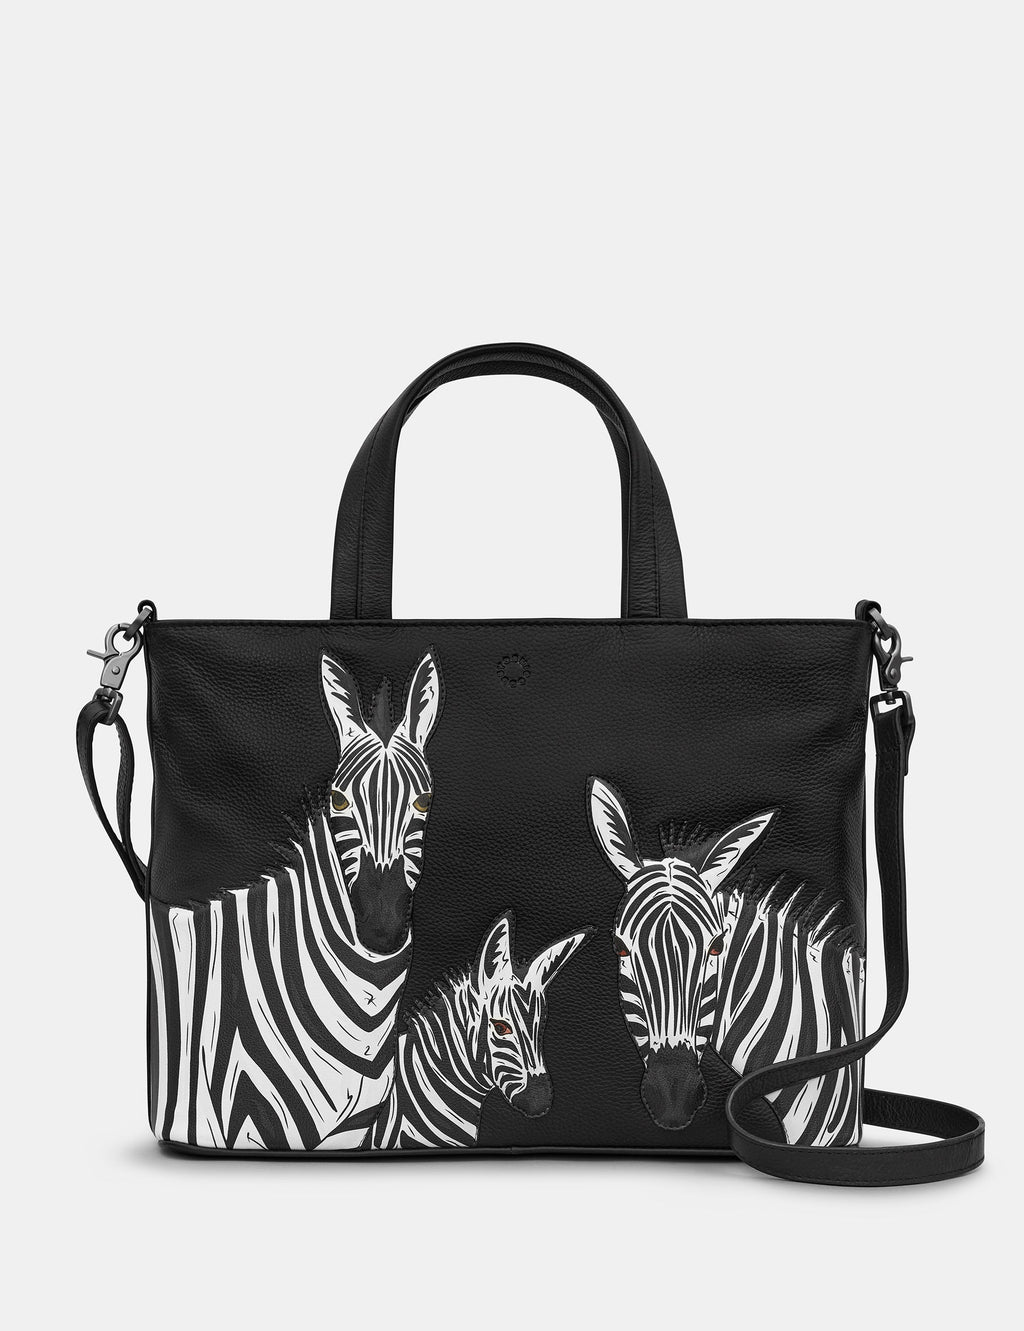 Yoshi - Black Zebra Leather Grab Bag